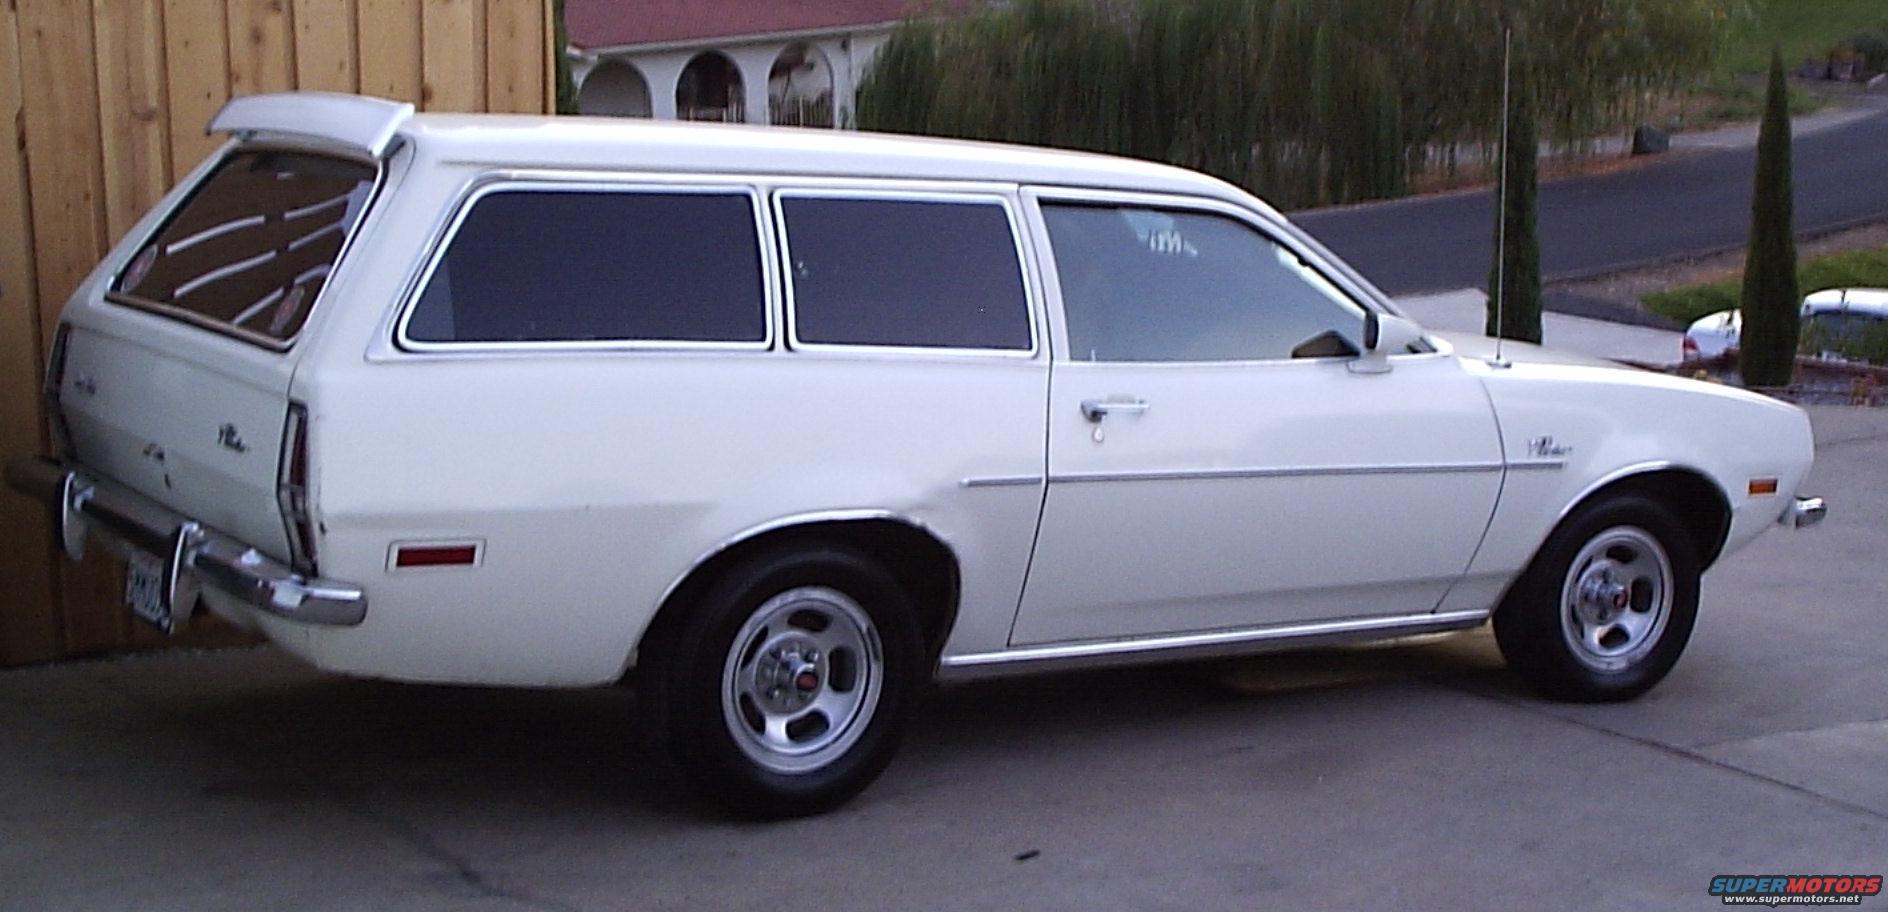 1973 Ford pinto station wagon #3